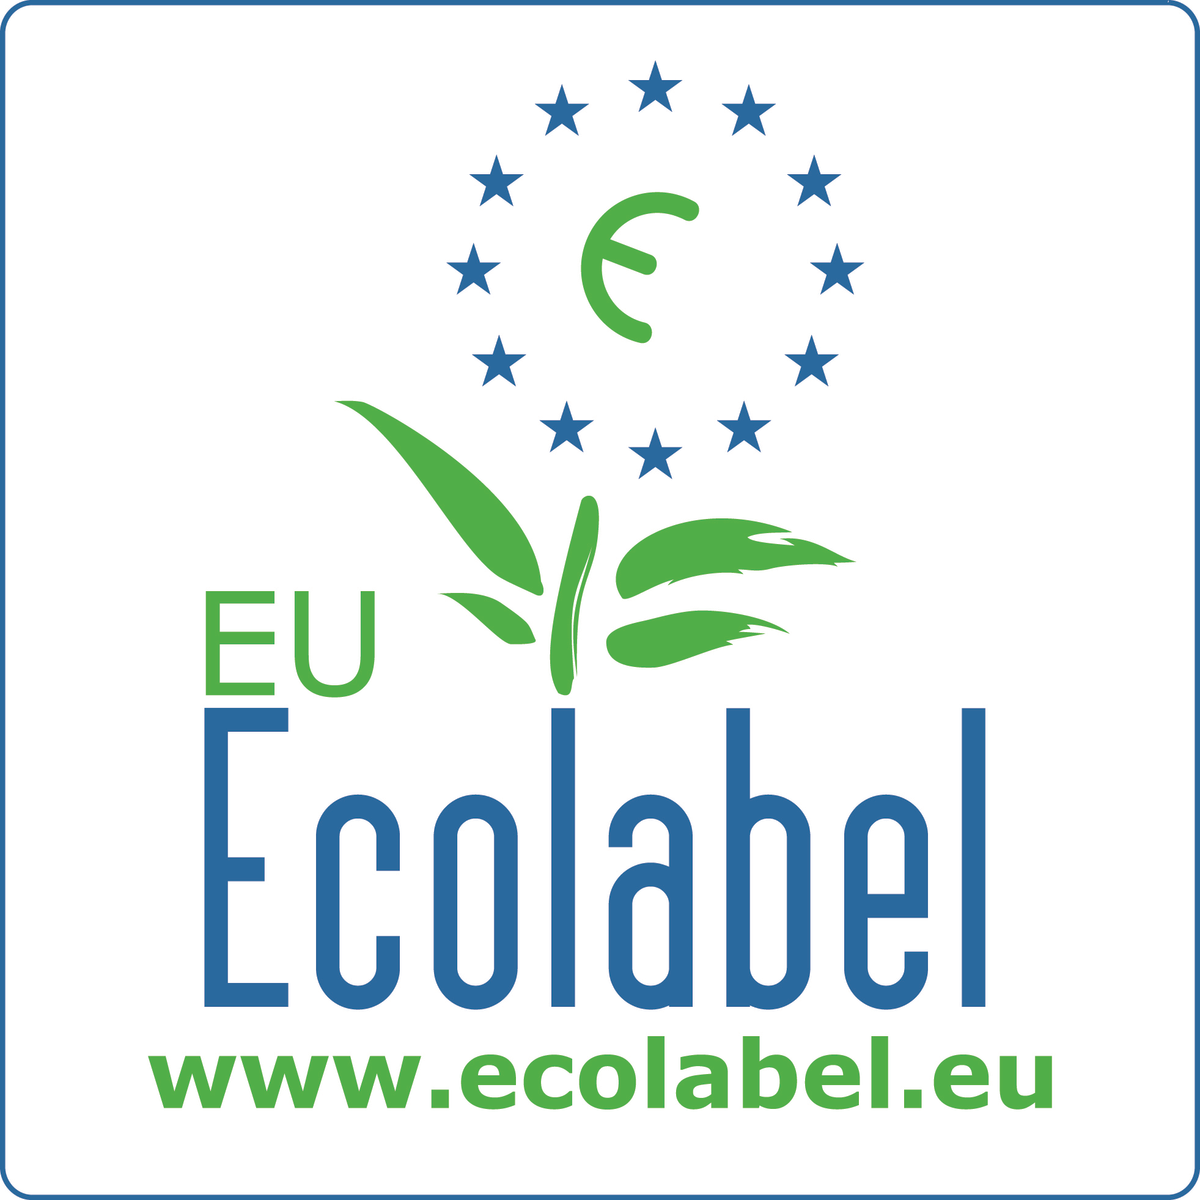 EU-Umweltzeichen (DK/030/001)